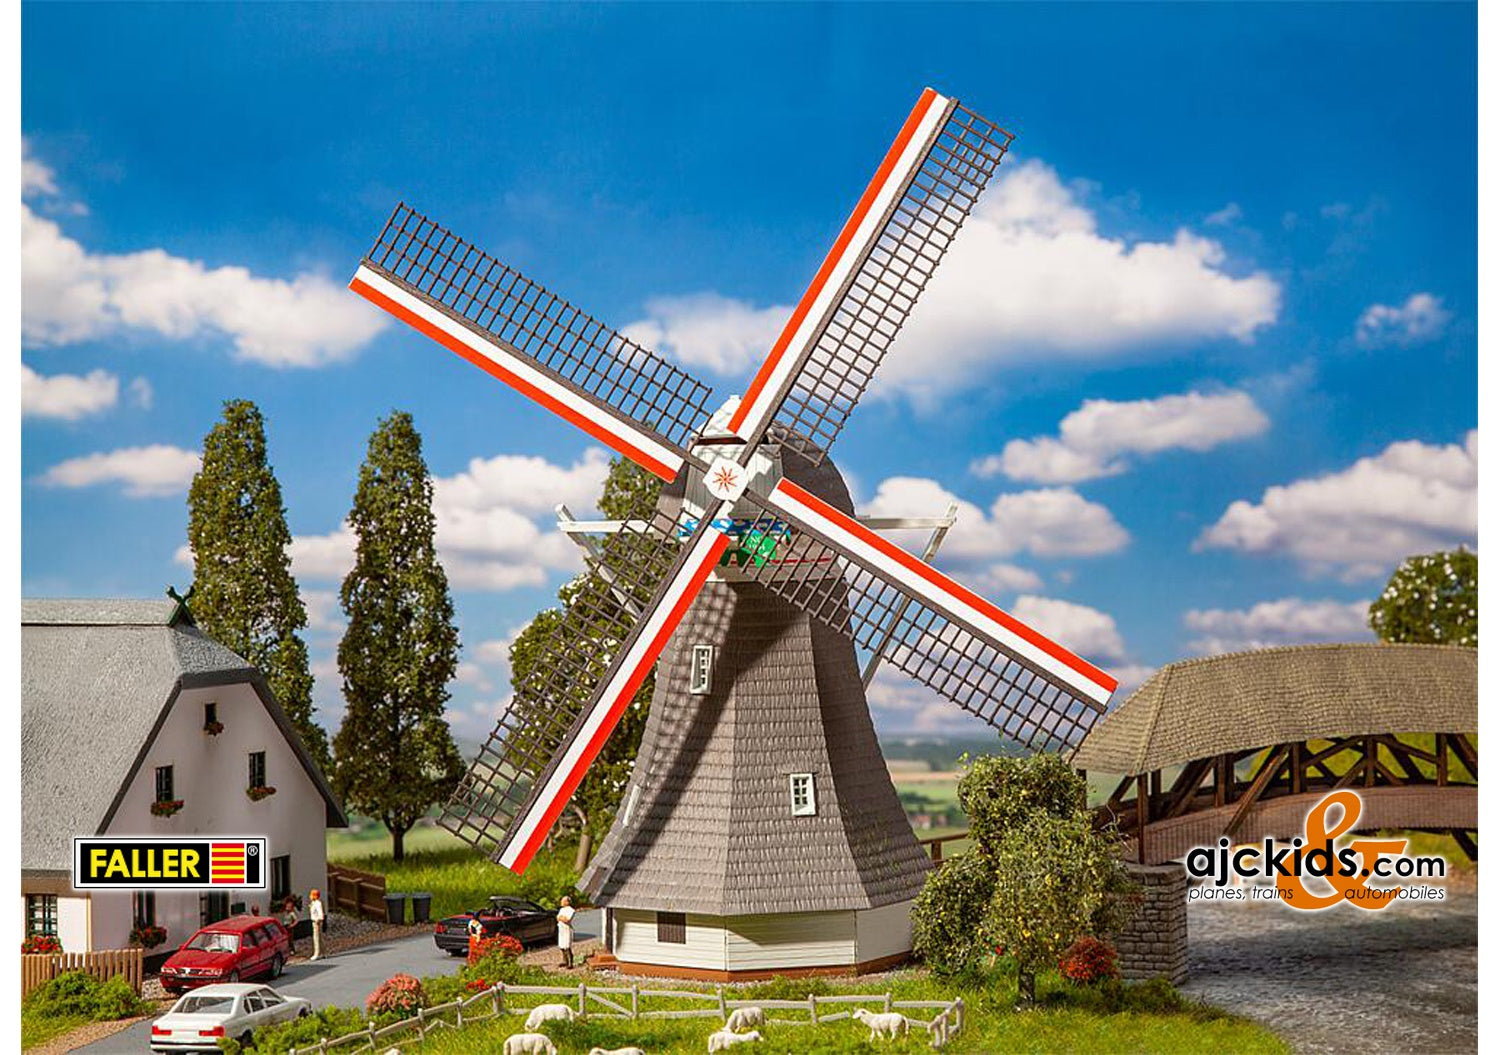 Faller 191763 - Small windmill